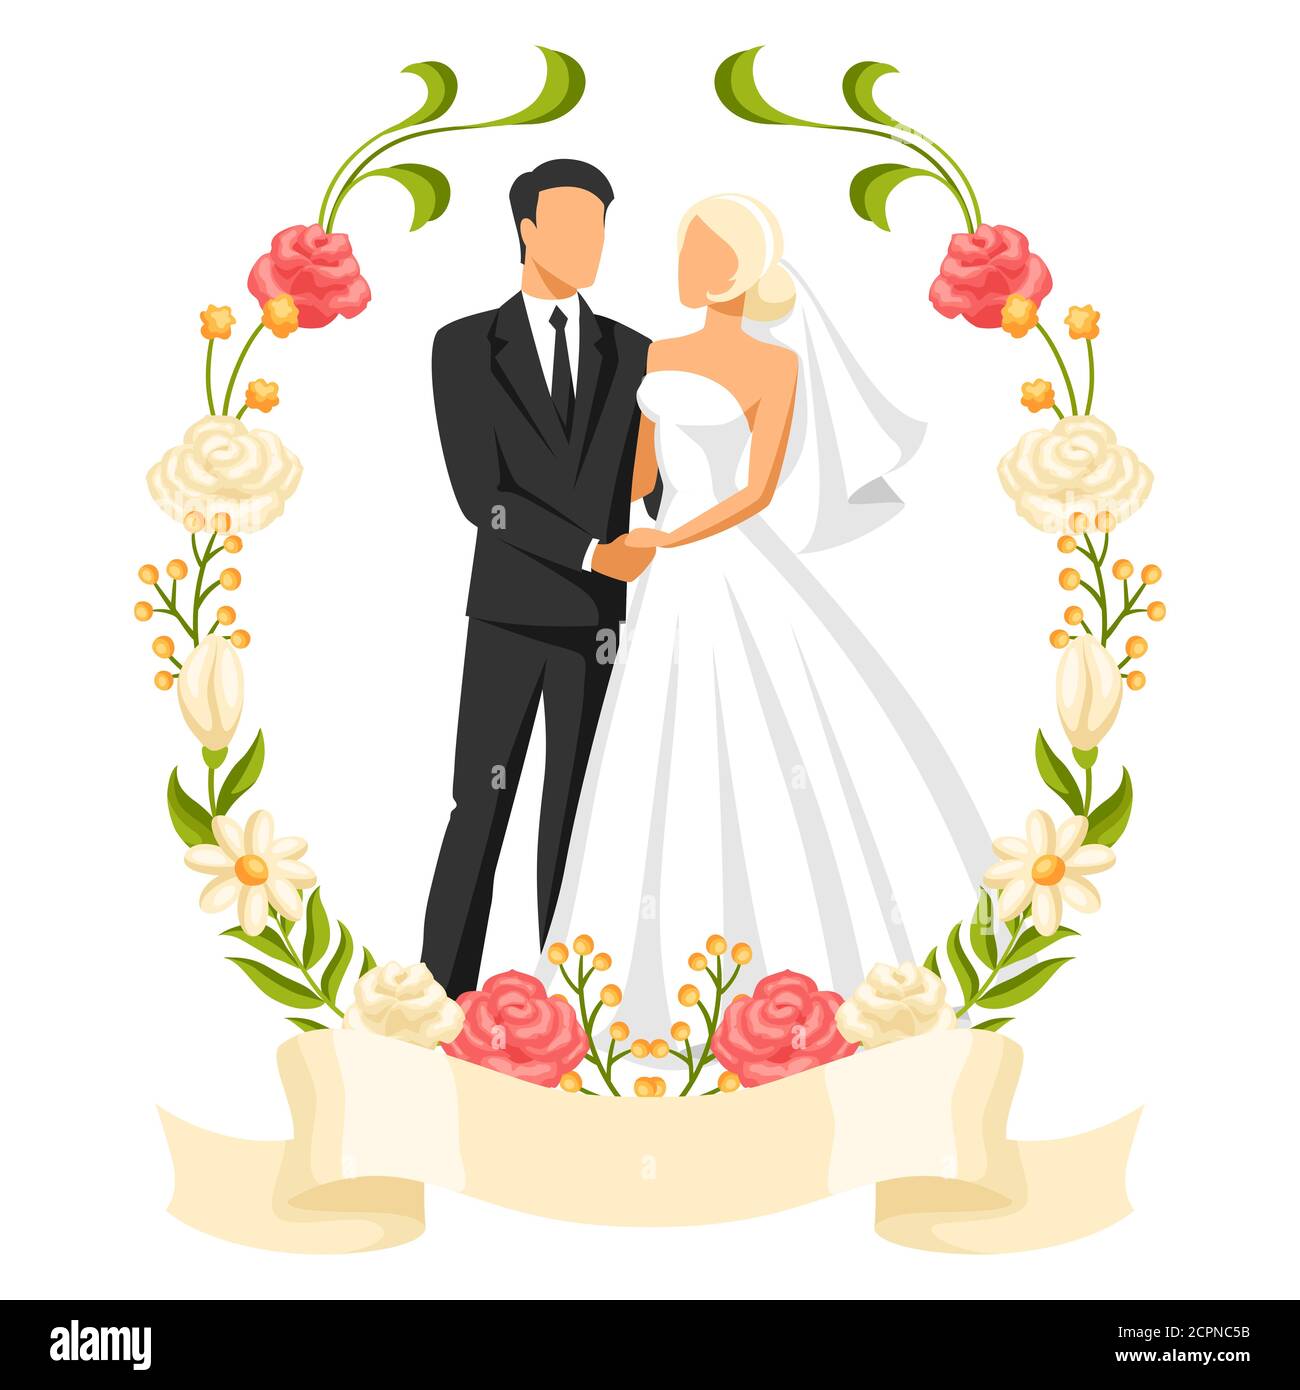 Wedding illustration of bride and groom Stock Vector Image & Art ...